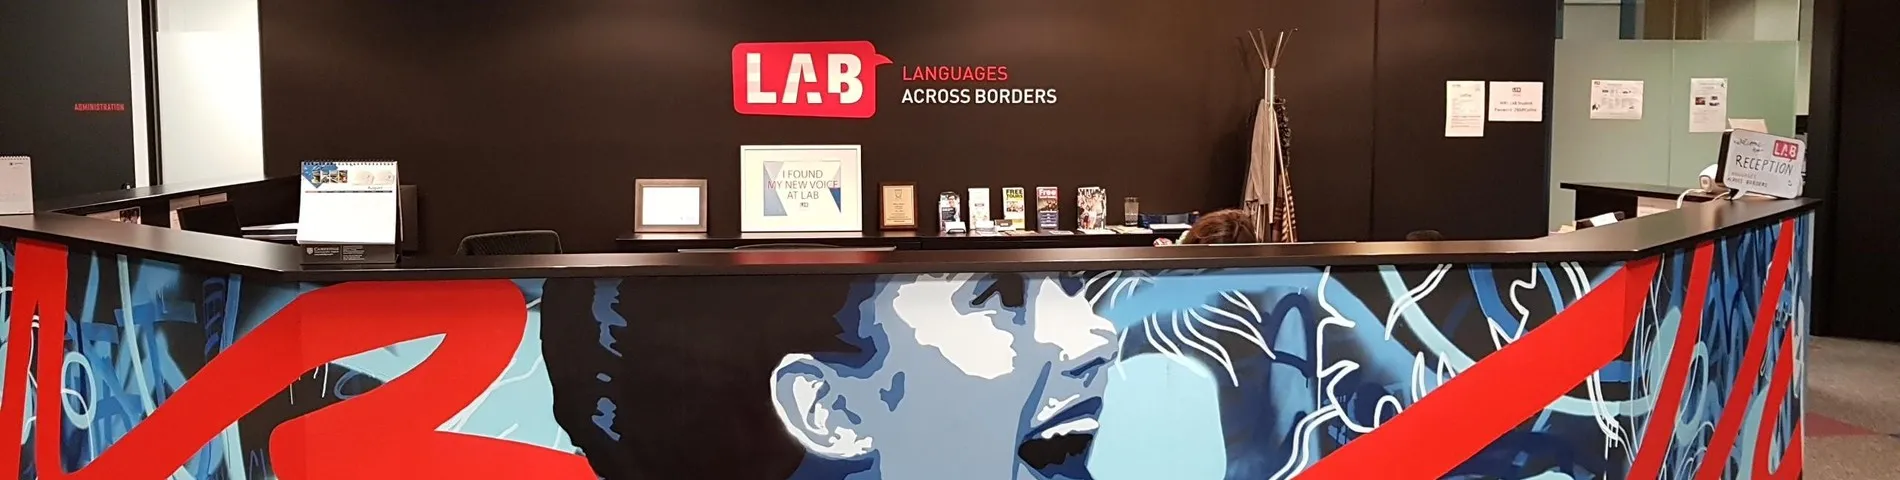 LAB - Languages Across Borders bild 1